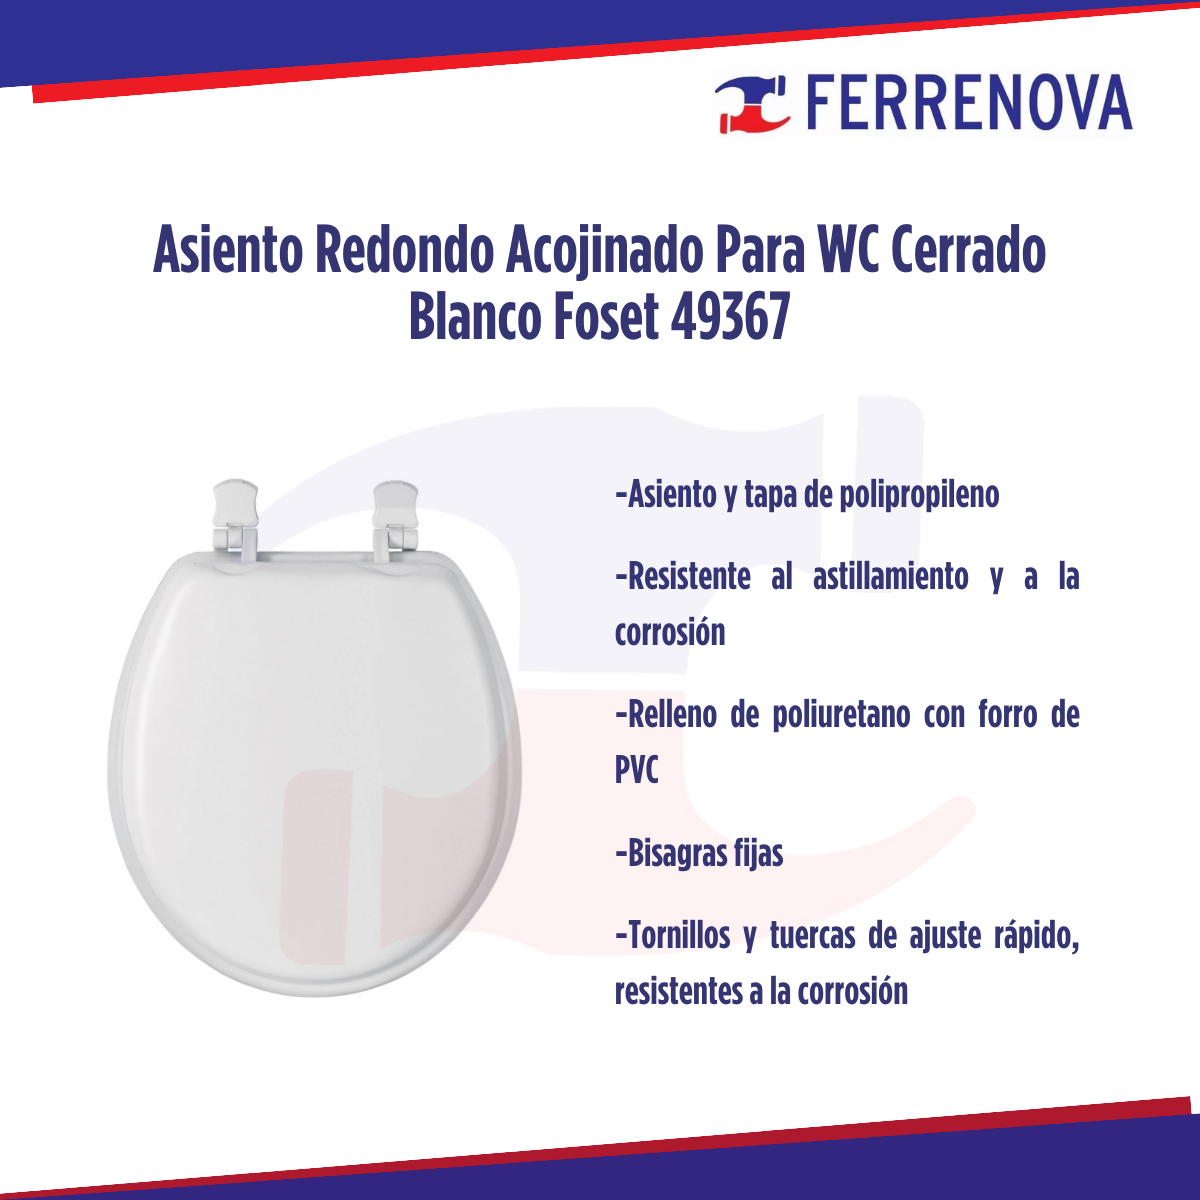 Asiento Redondo Acojinado Para WC Cerrado Blanco Foset 49367